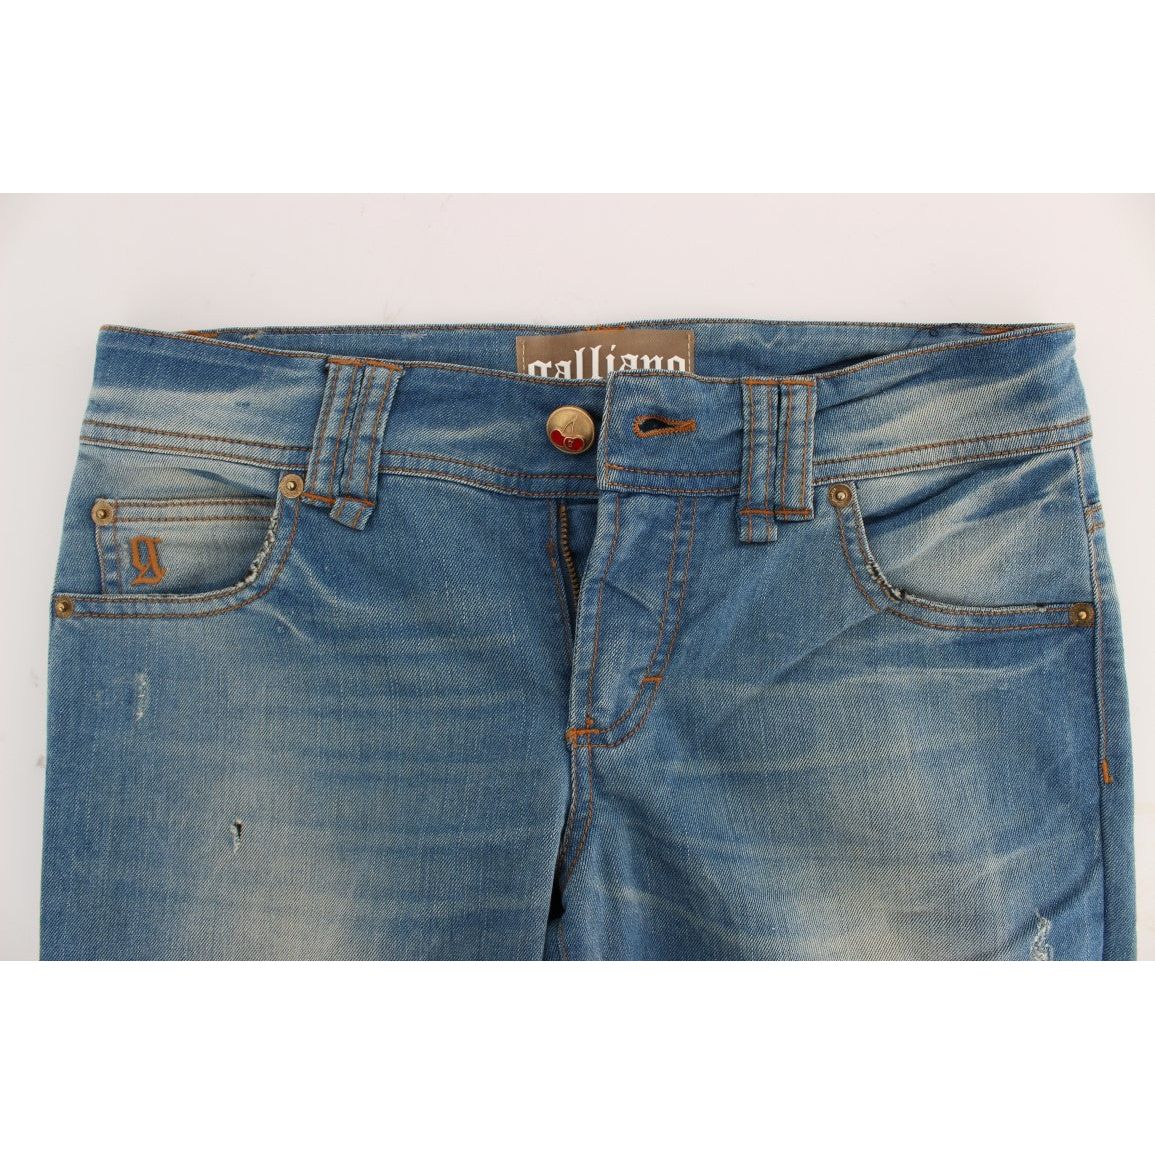 John Galliano Sleek Blue Slim Fit Designer Jeans blue-wash-cotton-blend-slim-fit-jeans-1 329905-blue-wash-cotton-blend-slim-fit-jeans-4-4.jpg